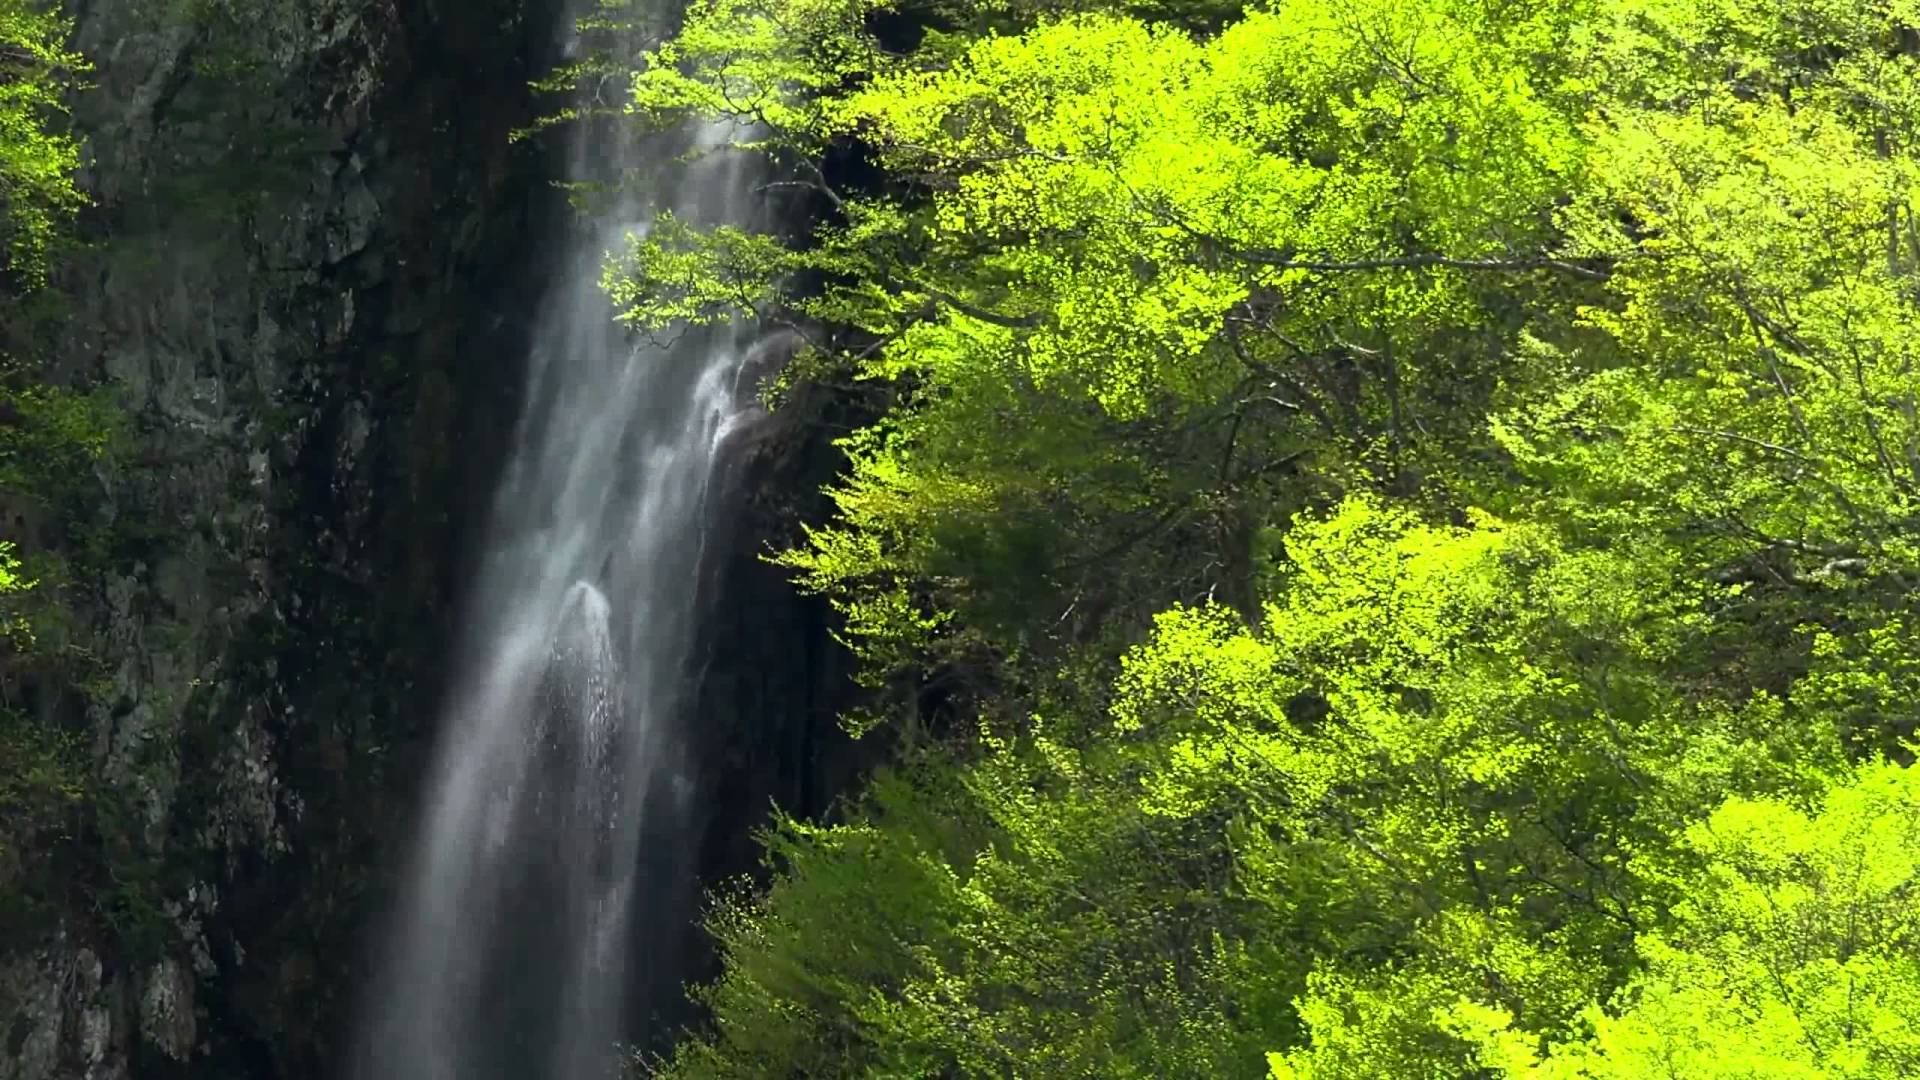 Amazing Nature 12 - Video Background HD 1080p - YouTube